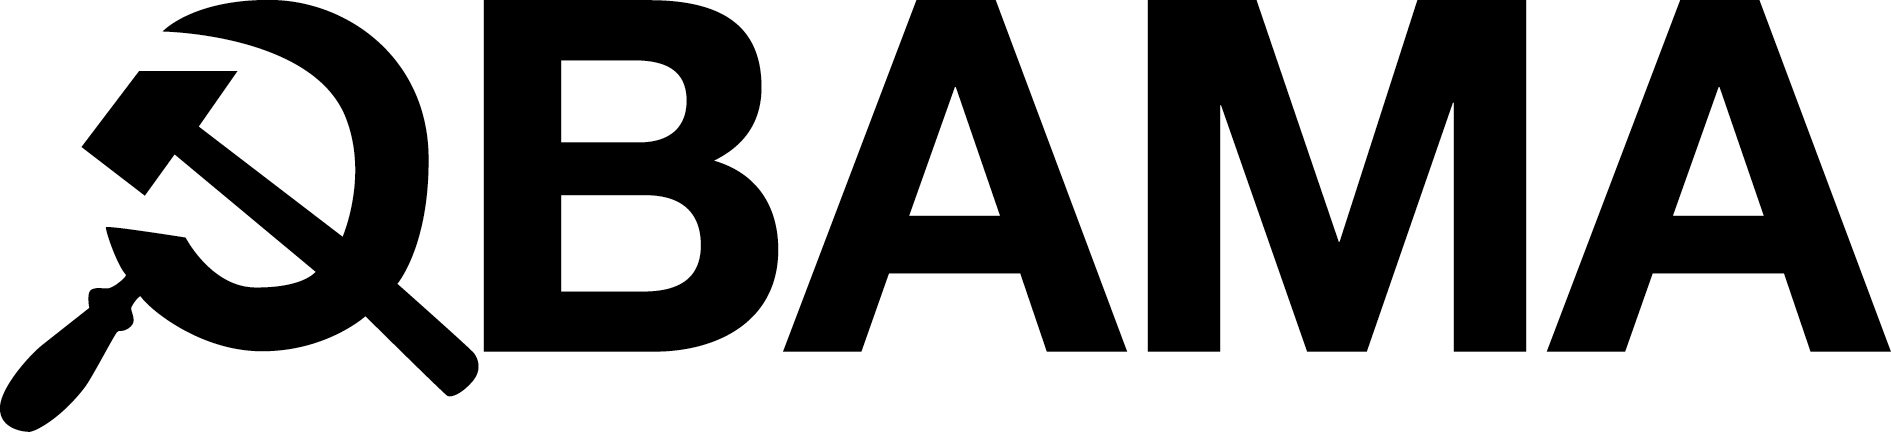 Trademark Logo OBAMA